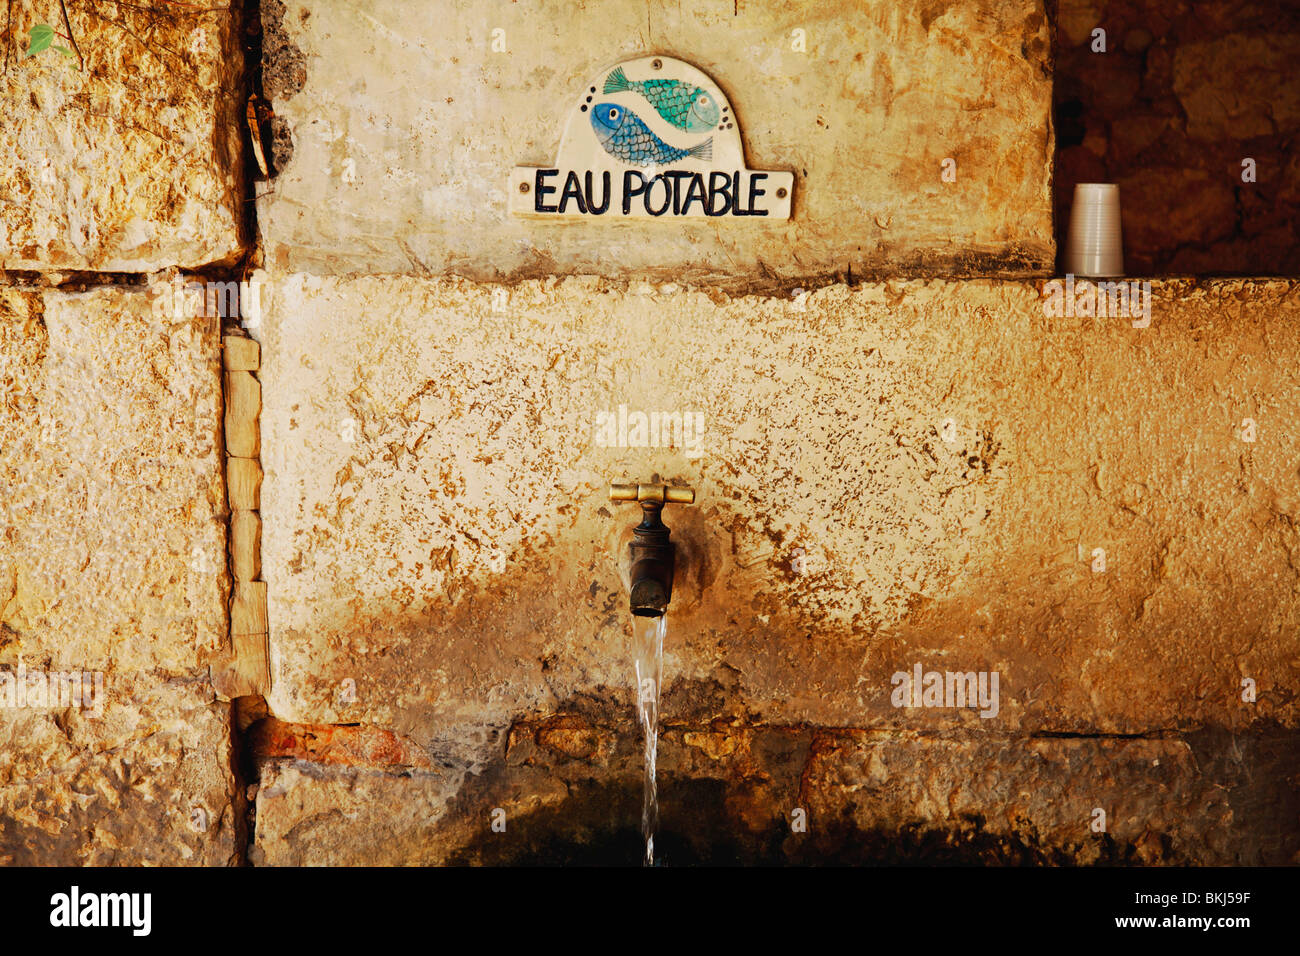 Gourdon, Provenza, Francia; el grifo con un letrero que dice "Eau Potable' Foto de stock